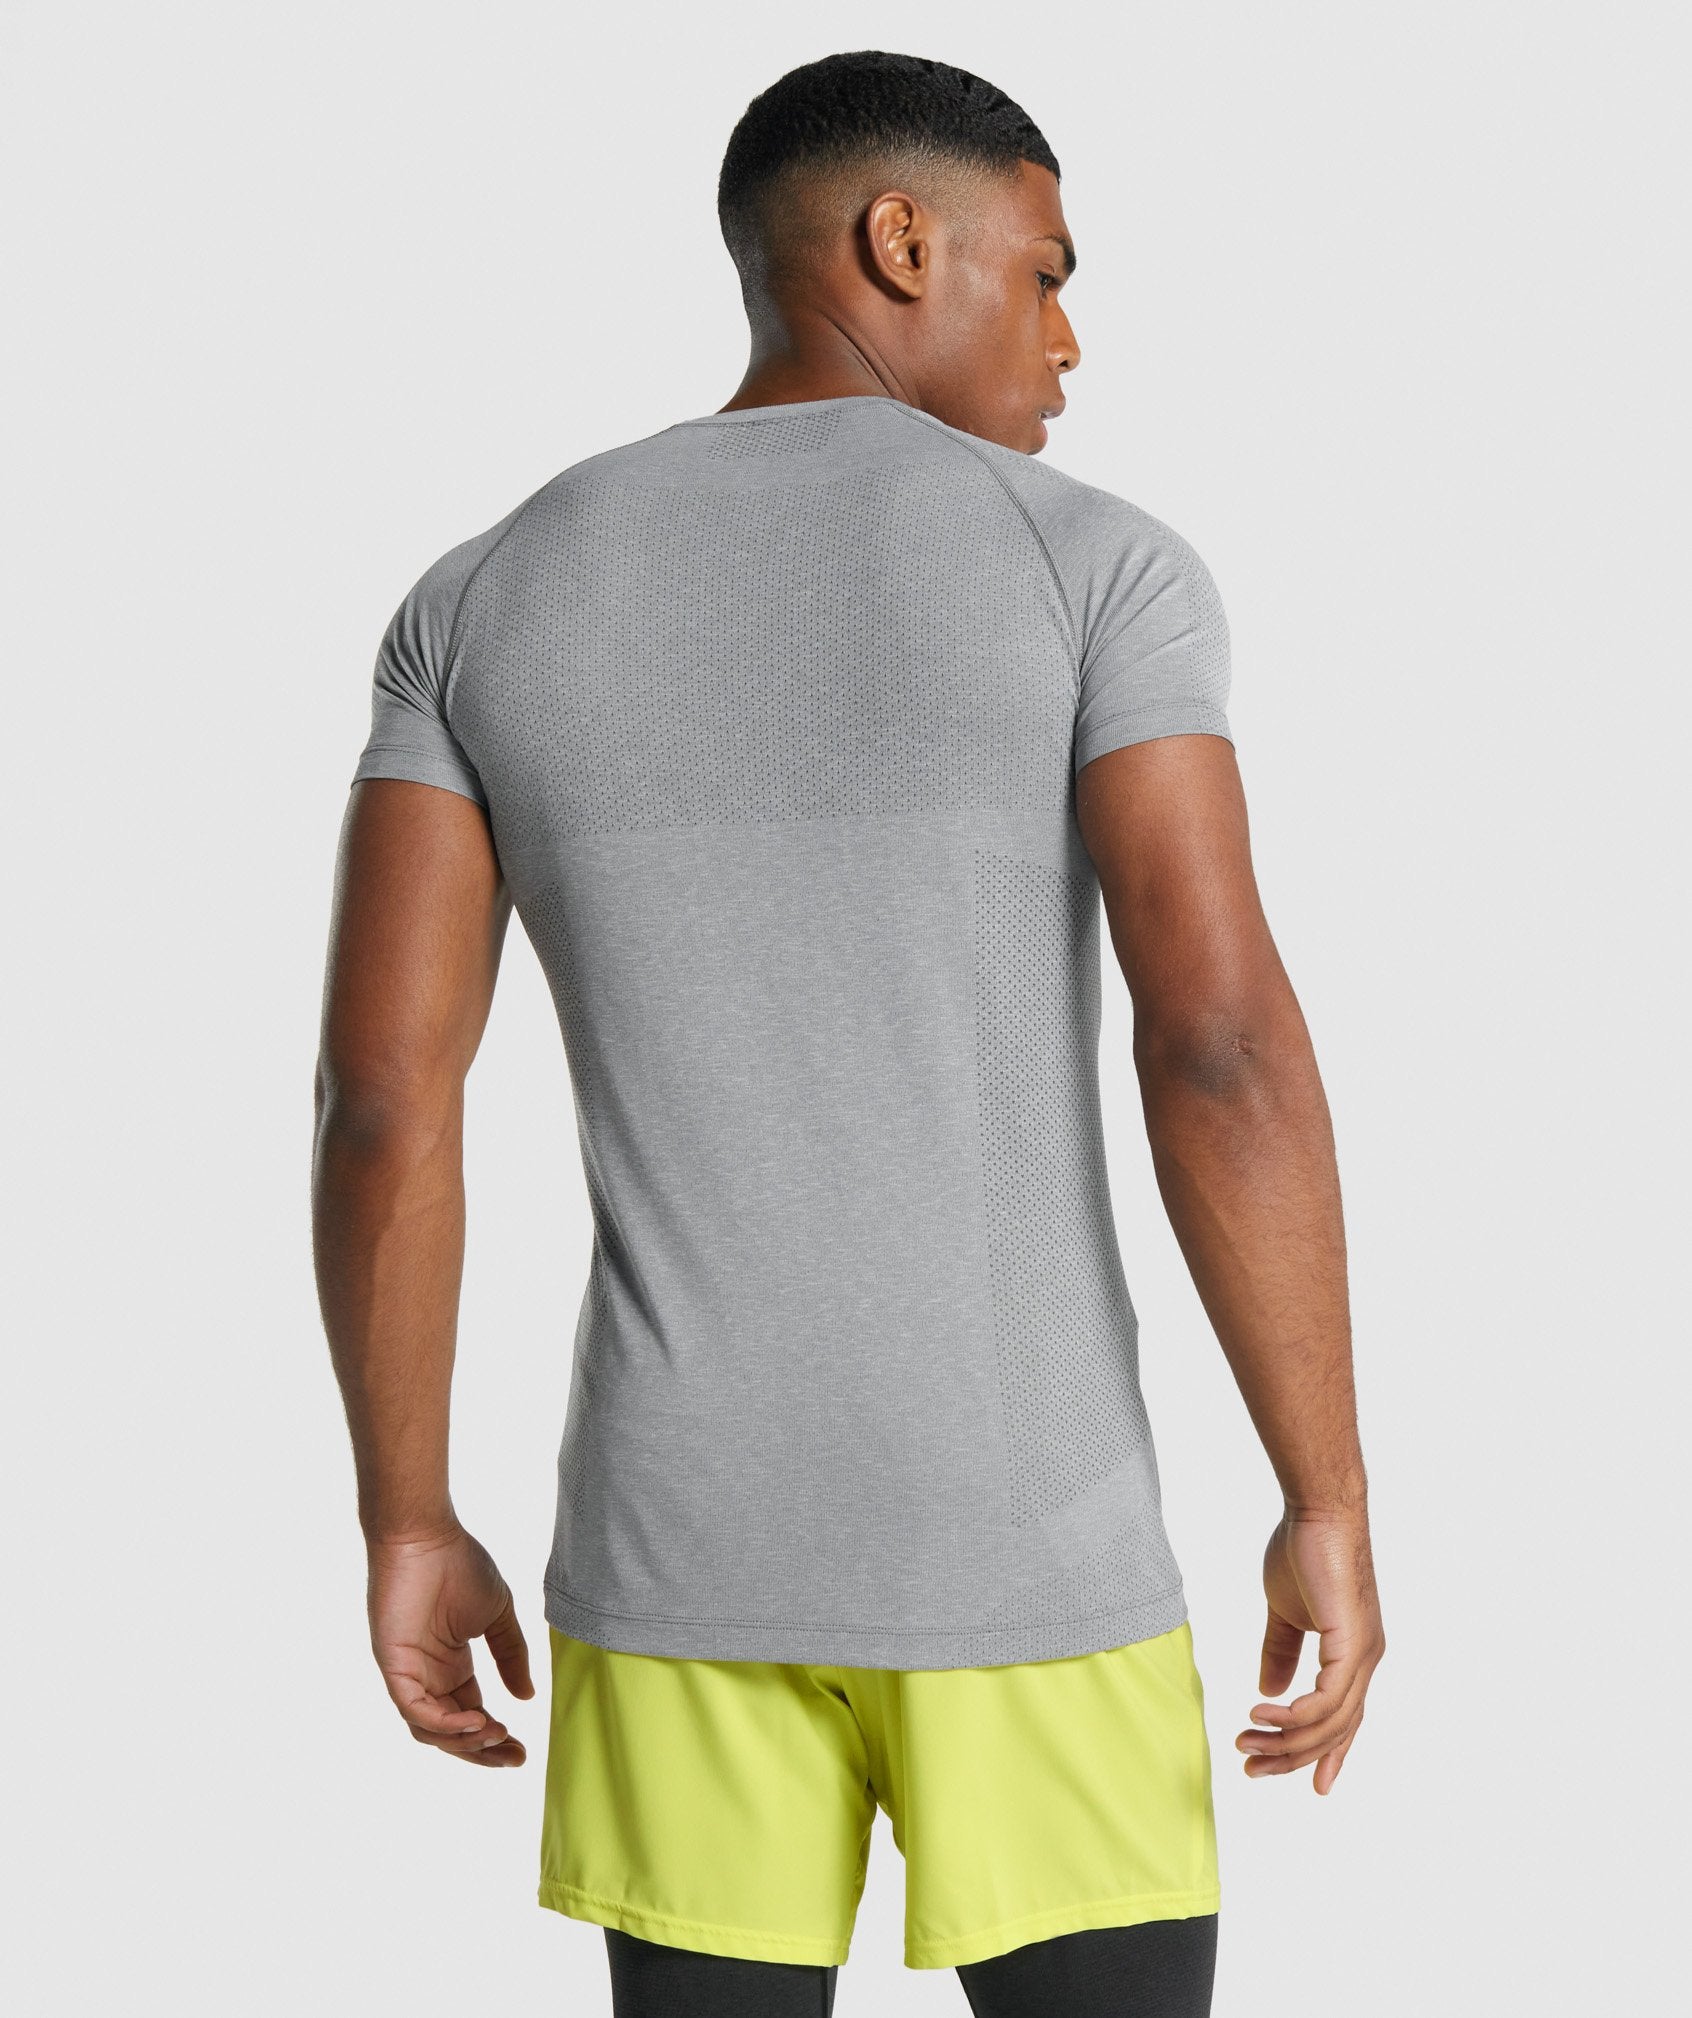 Vital Light Seamless T-Shirt in Charcoal Marl